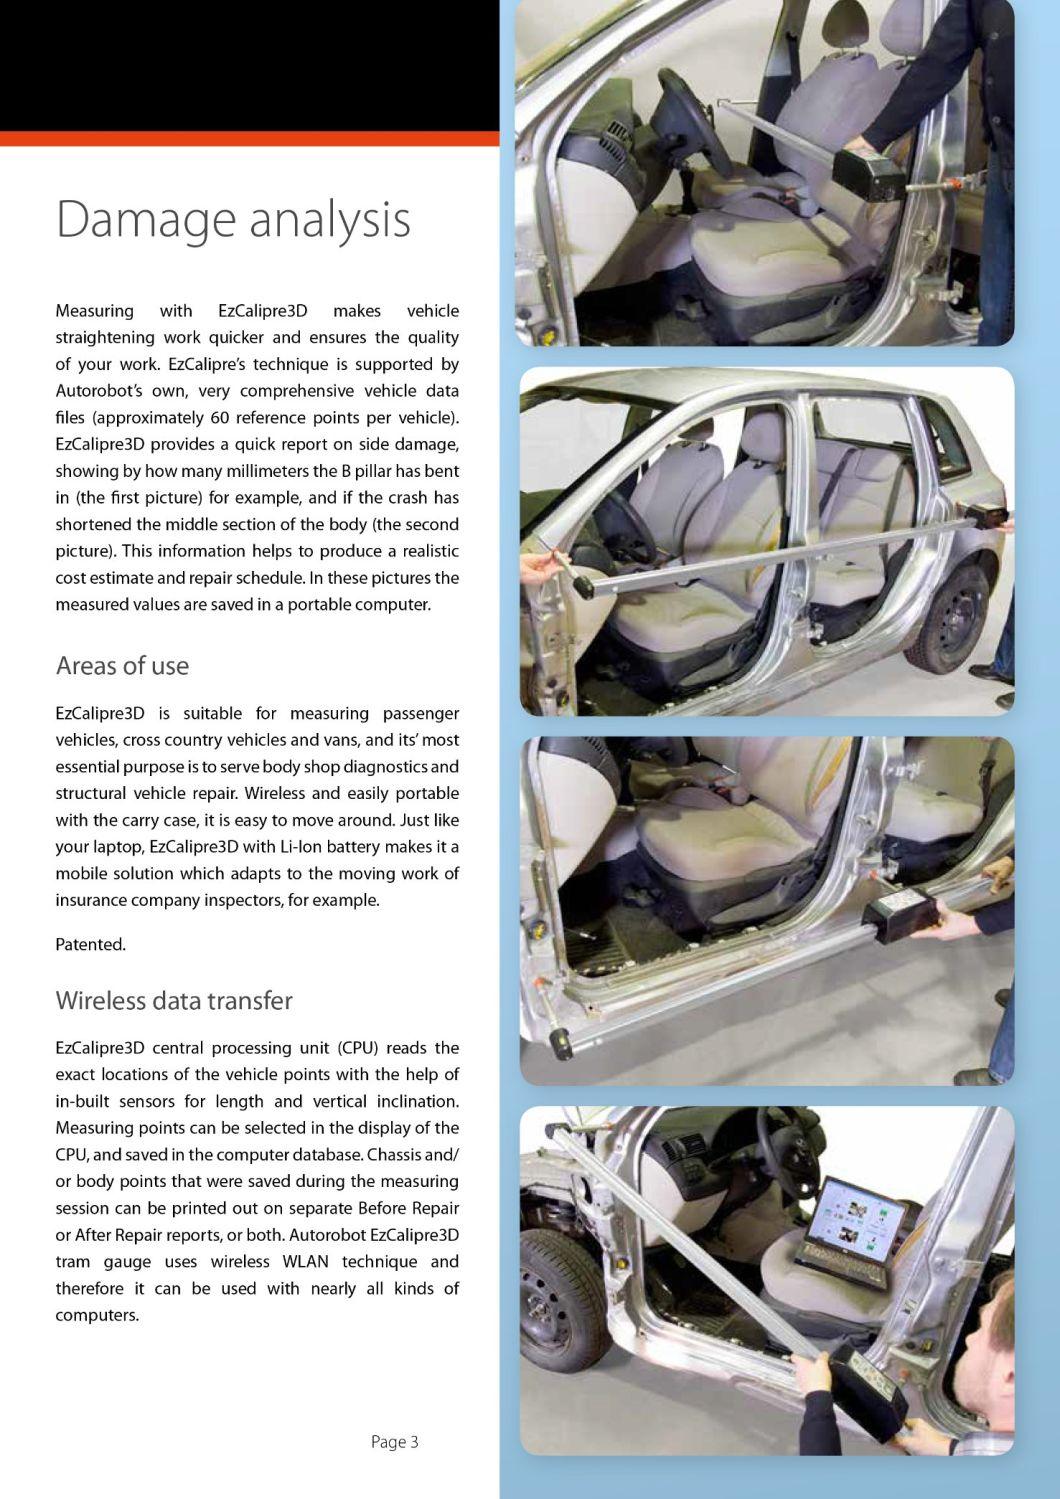 Ezcalipre Collision Center Automotive Measuring System Measure